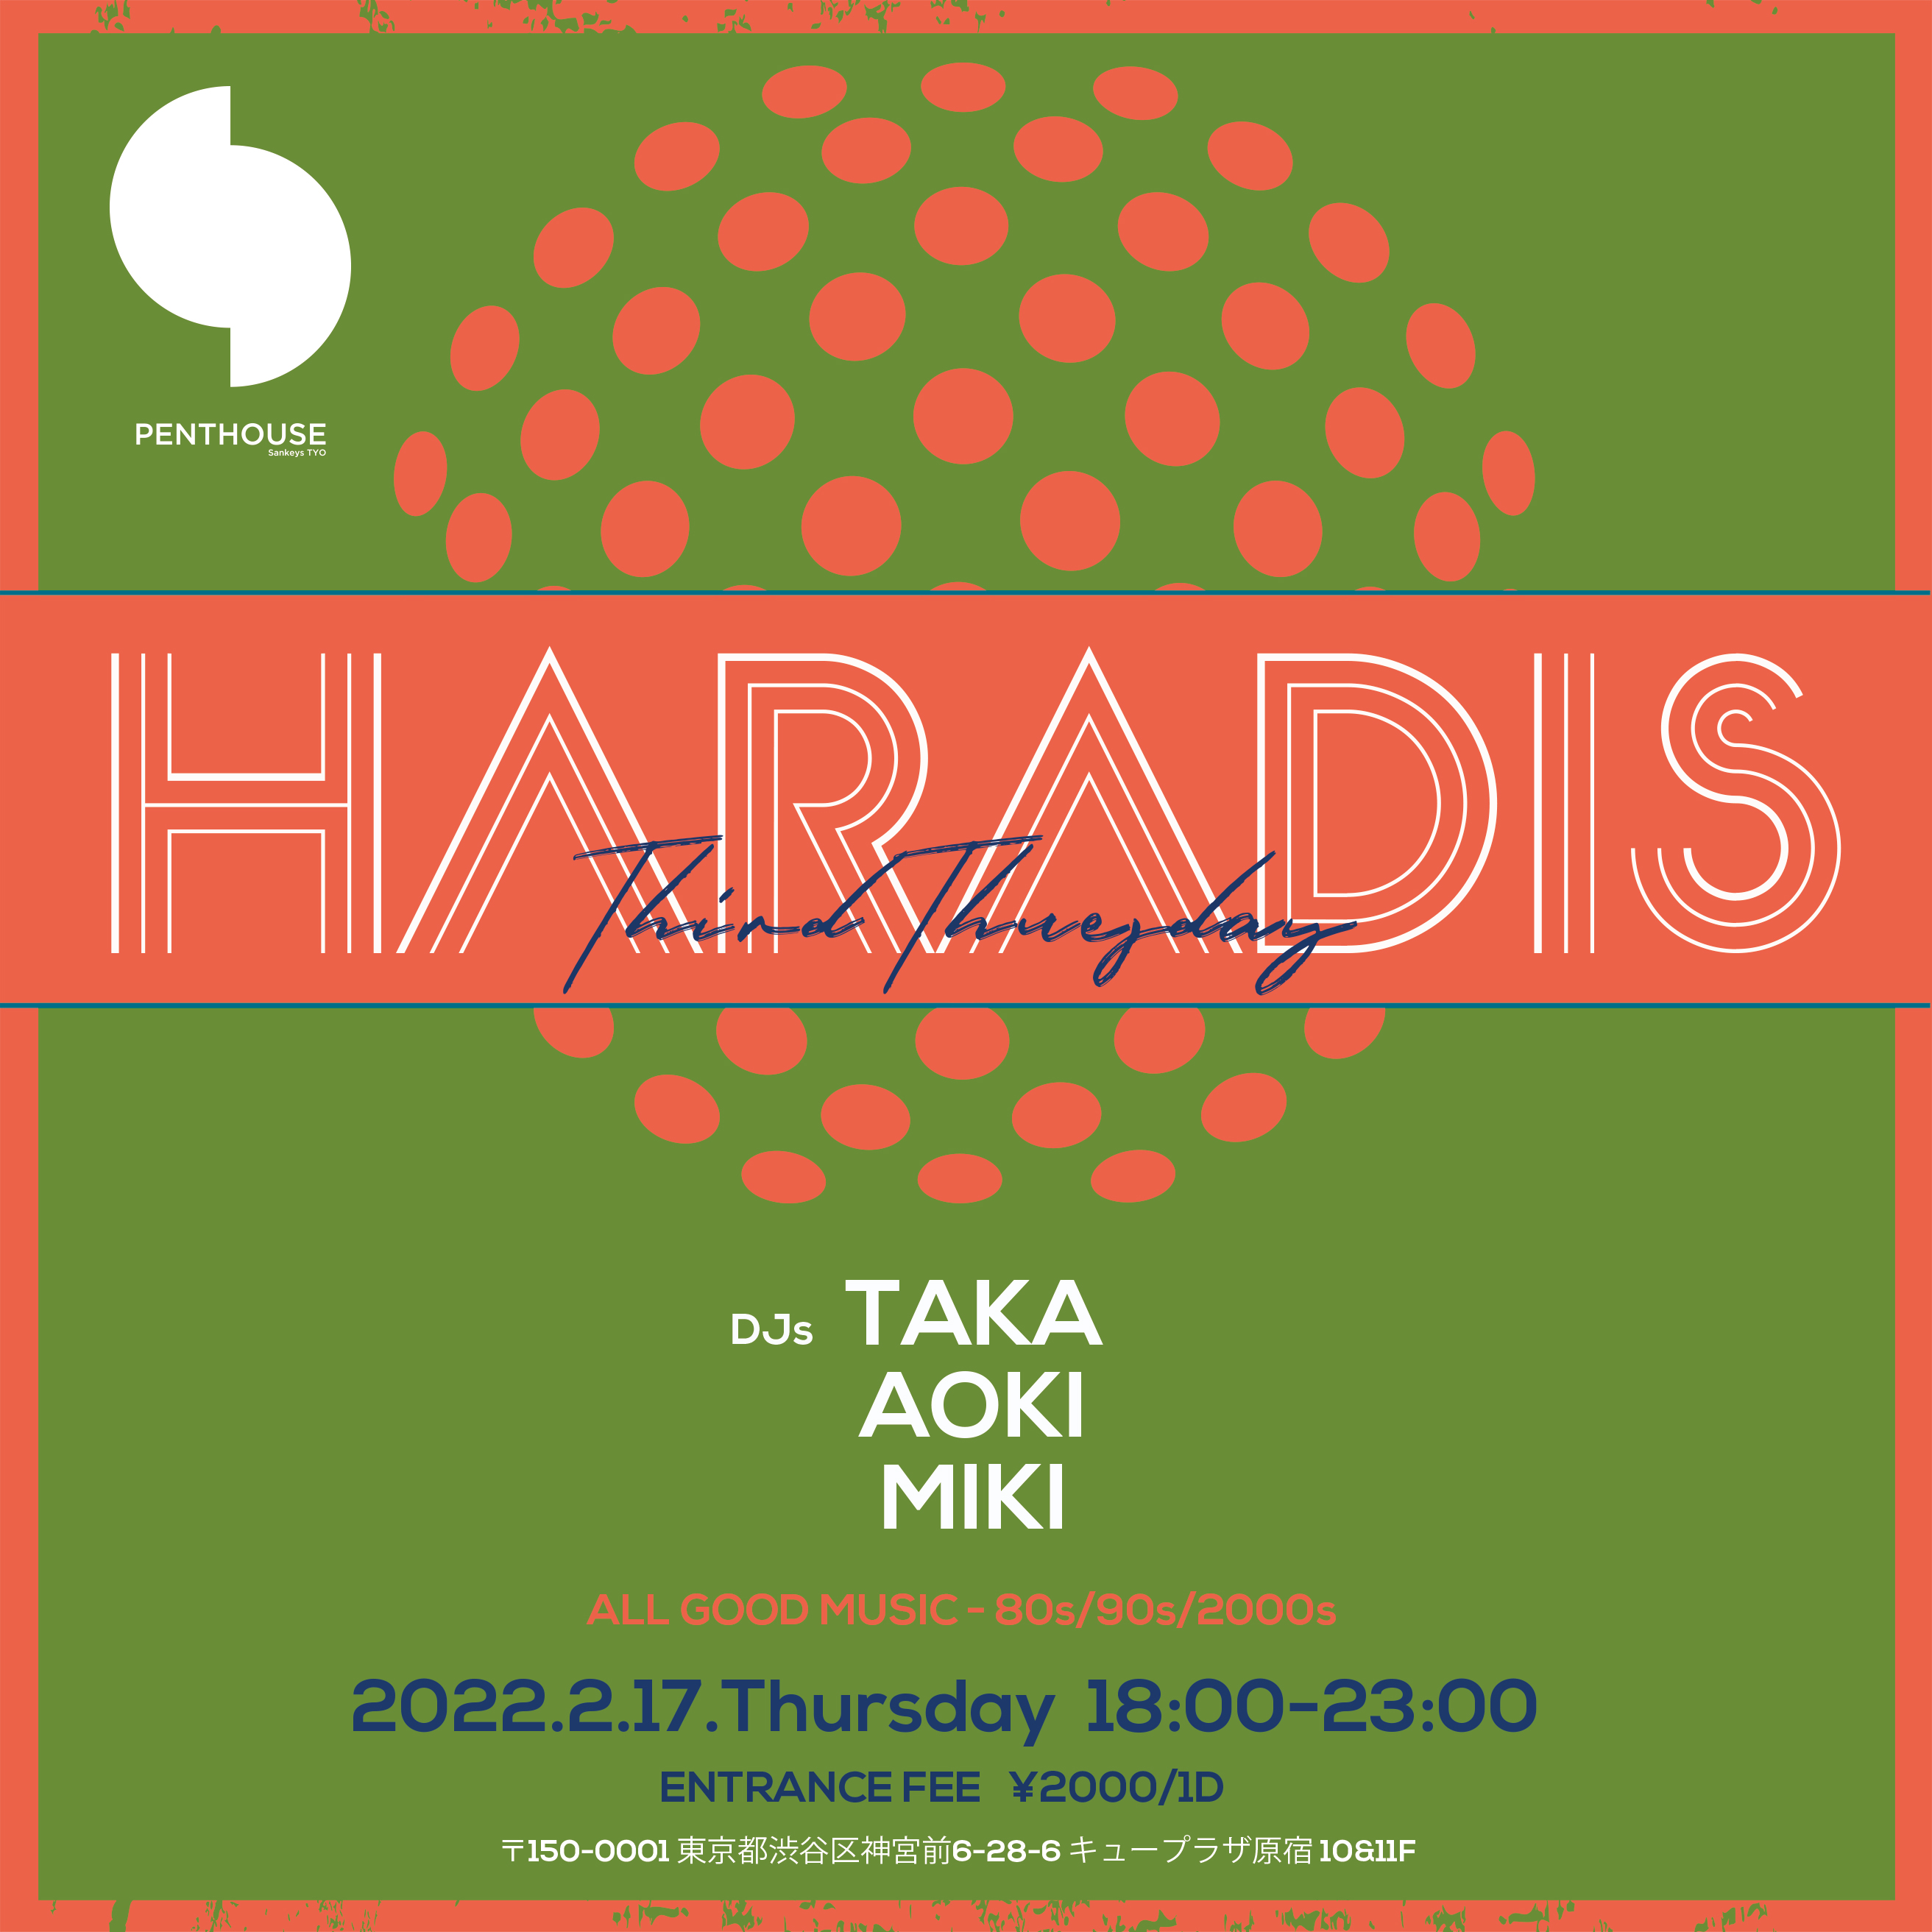 HARADIS -Third Thursday- 公演中止